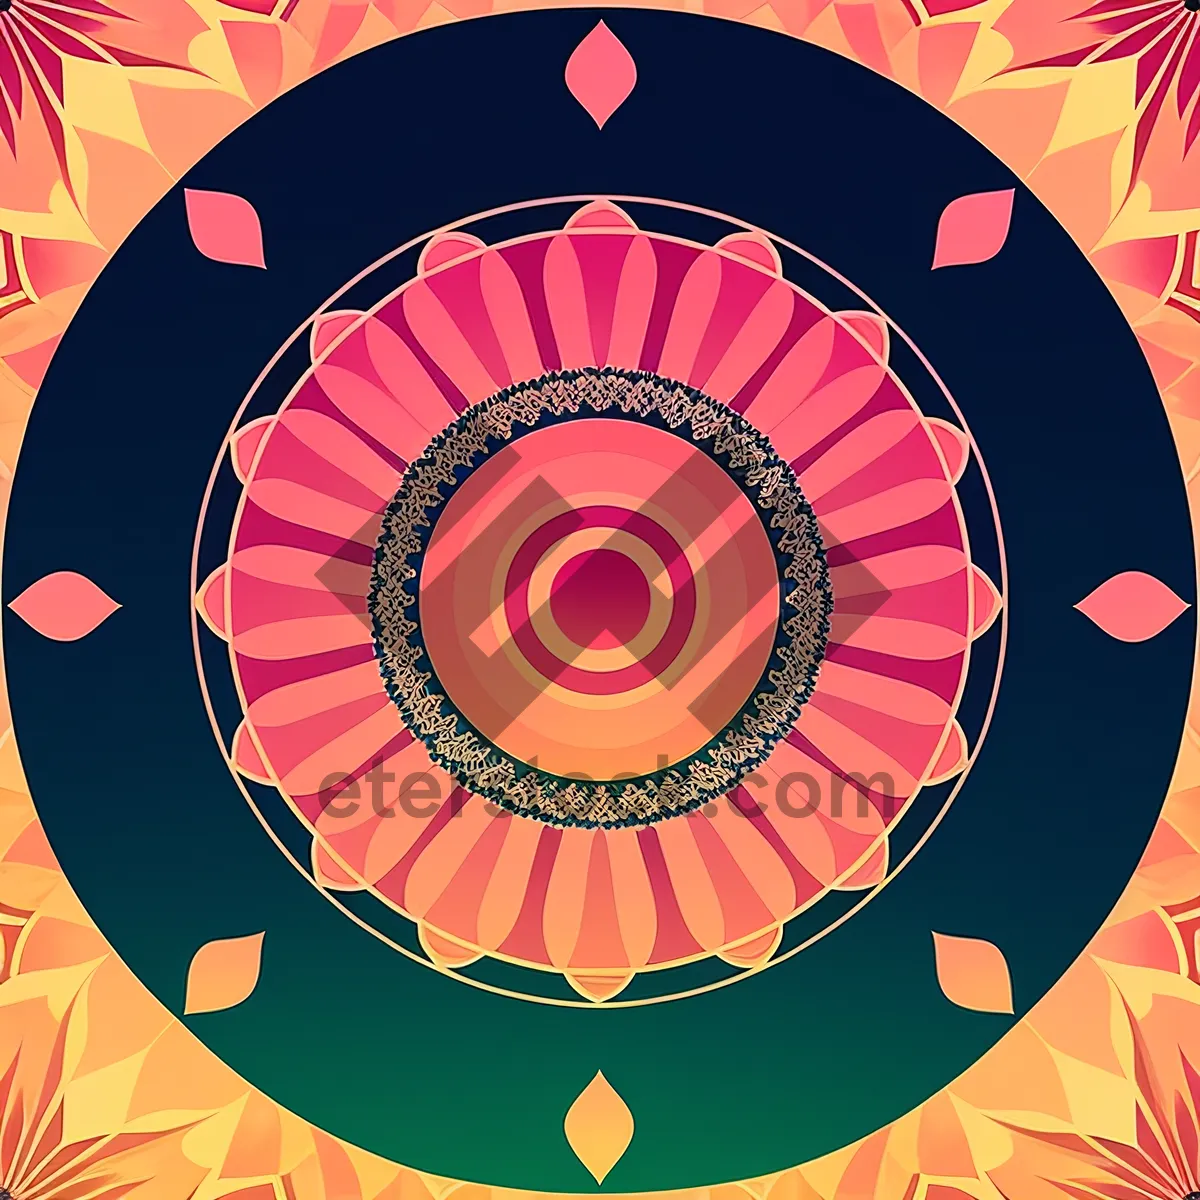 Picture of Hippie-inspired Retro Circle Graphic Design